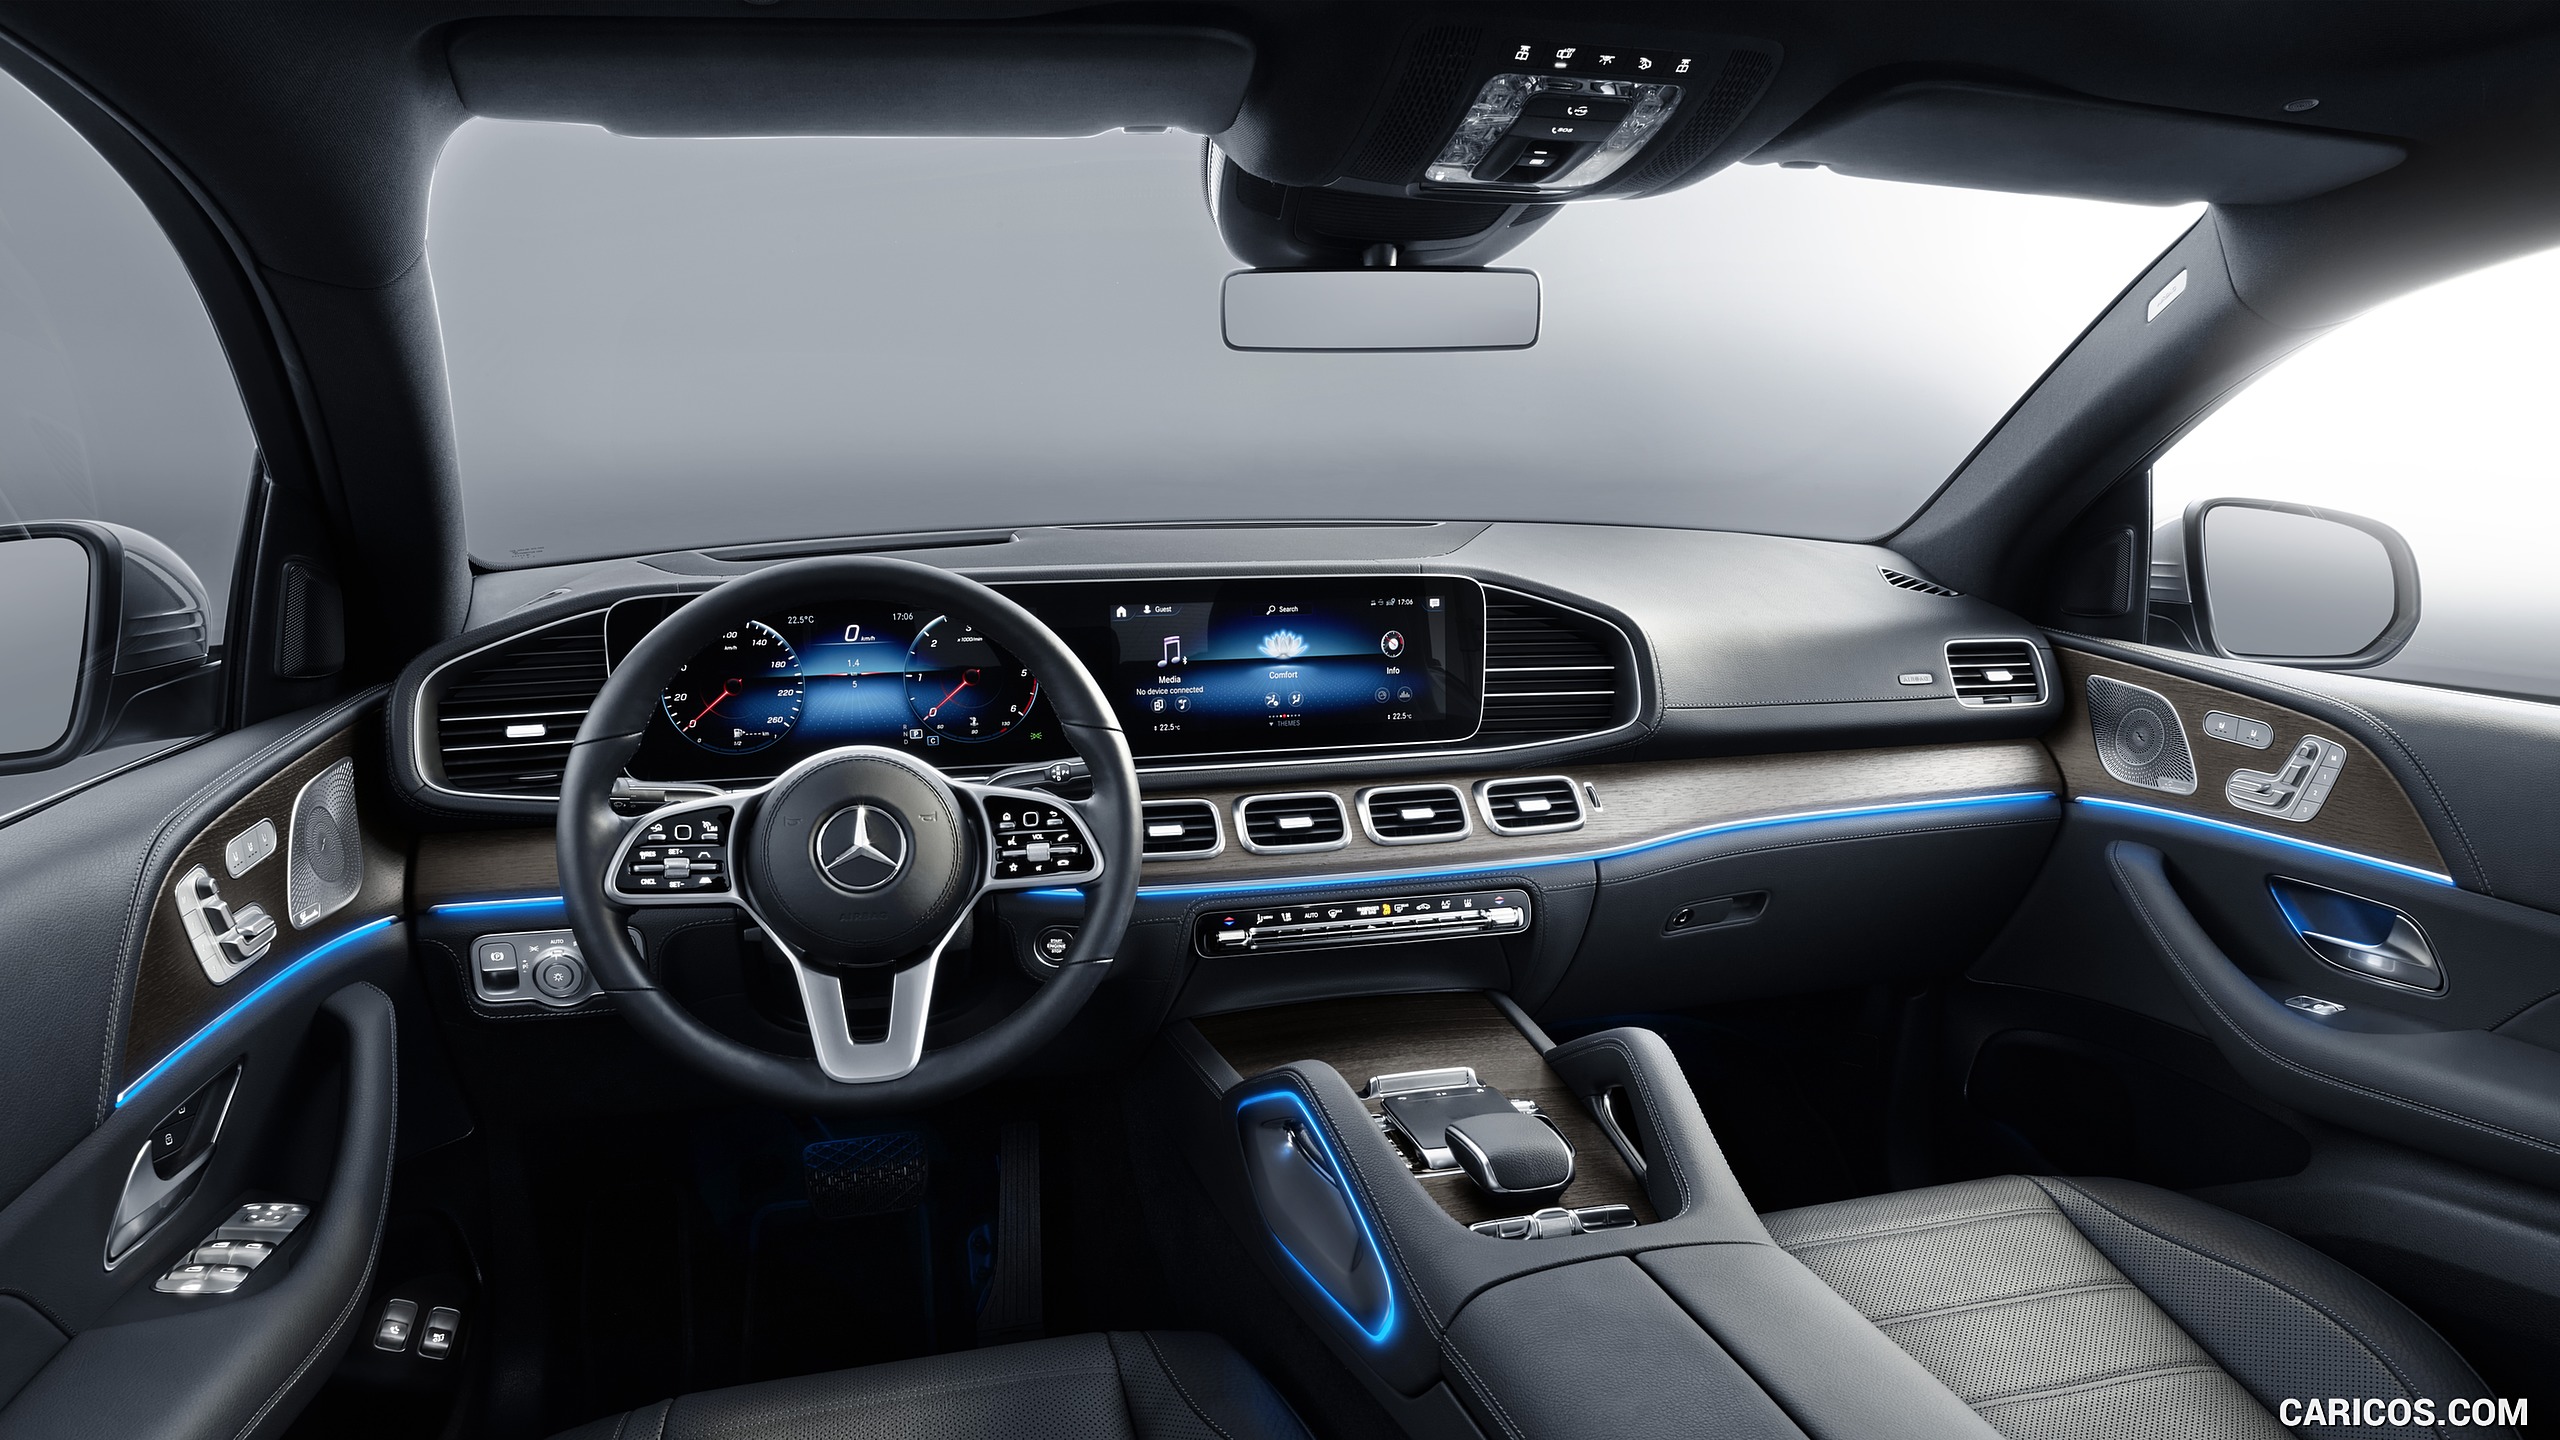 2021 Mercedes Benz GLE Coupe   Interior%2C Cockpit 206736 2560x1440 